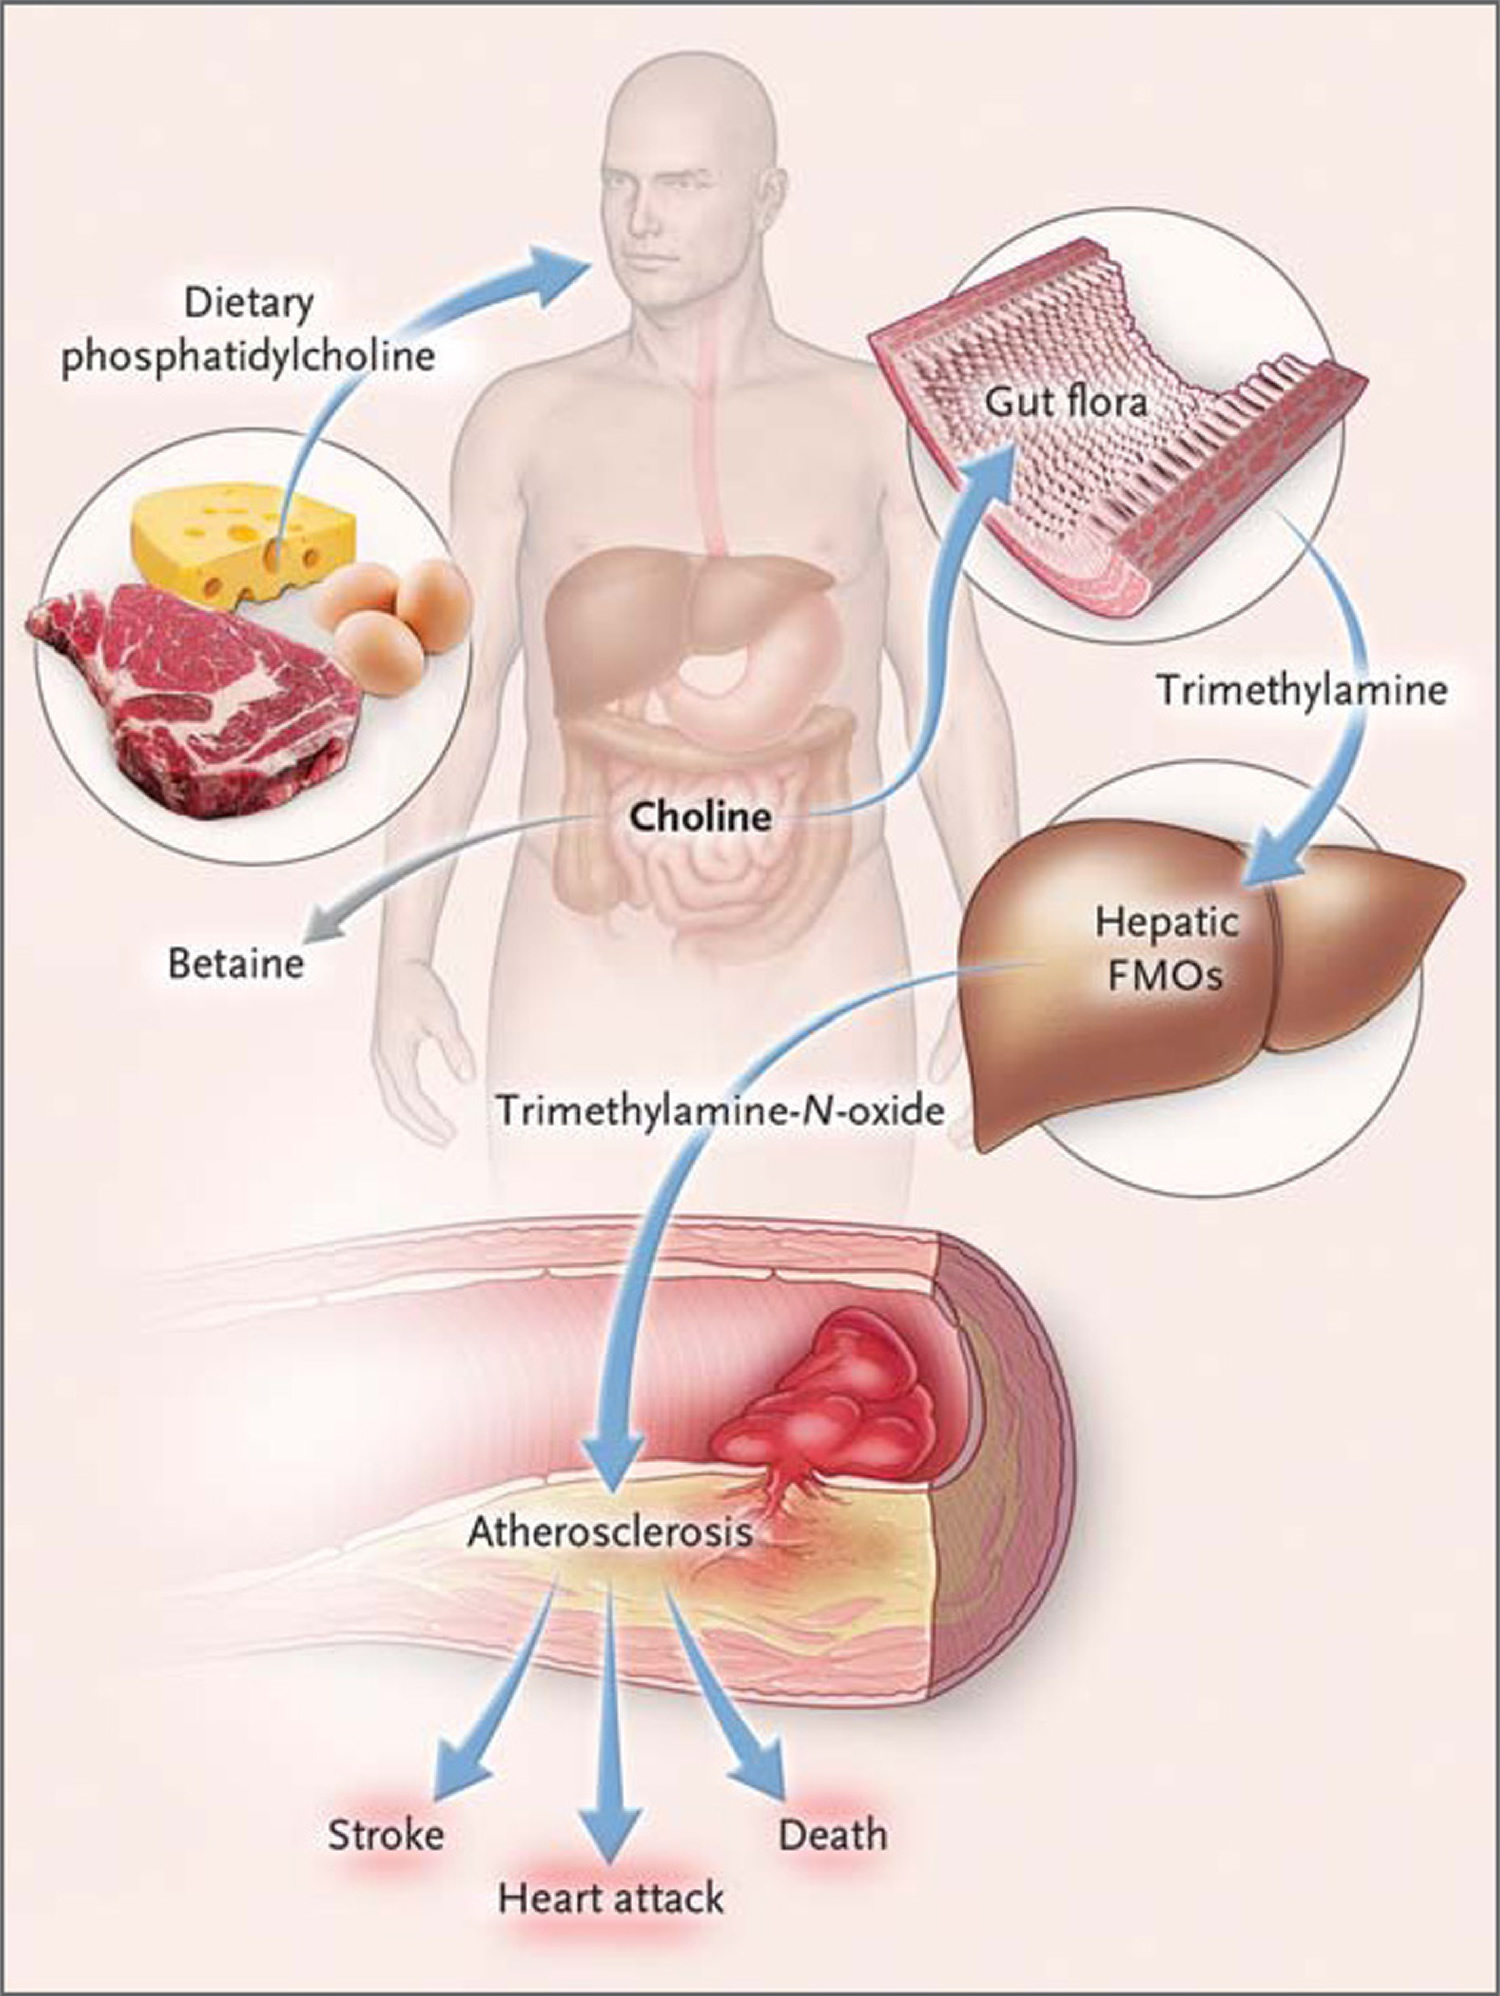 dietary-phosphatidylcholine-and-cardiovascular-diseases